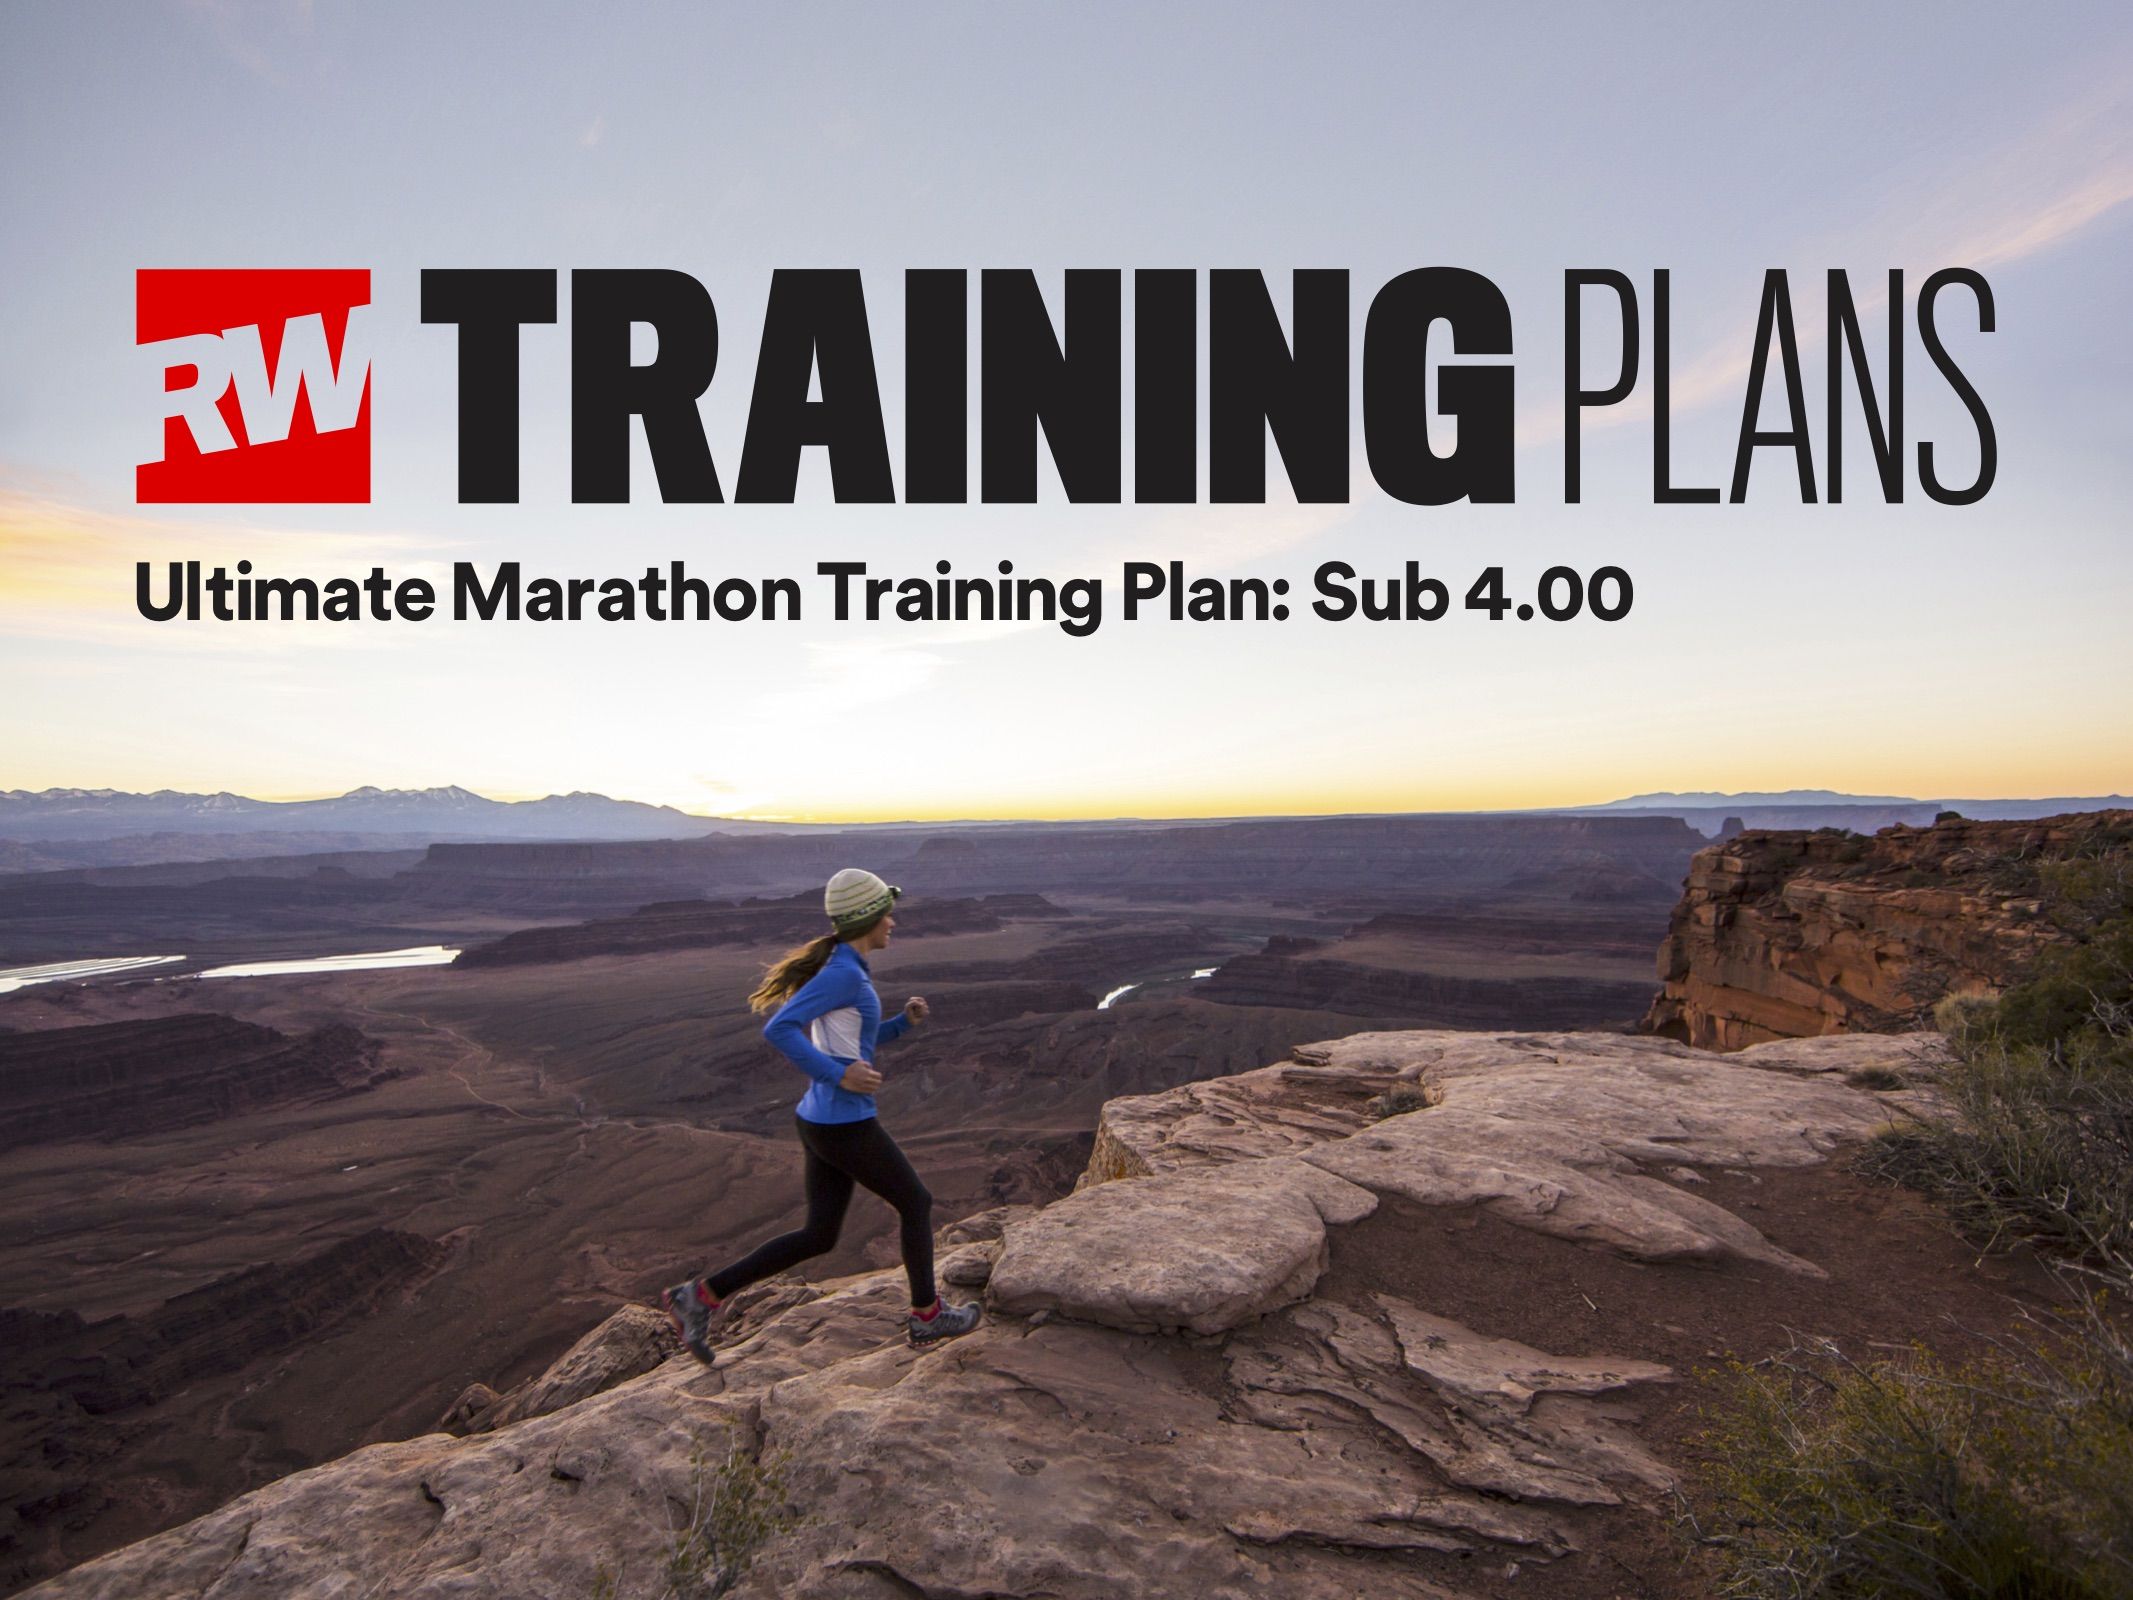 torneo Para construir Exitoso 16-week marathon training plan for runners looking to run sub 4